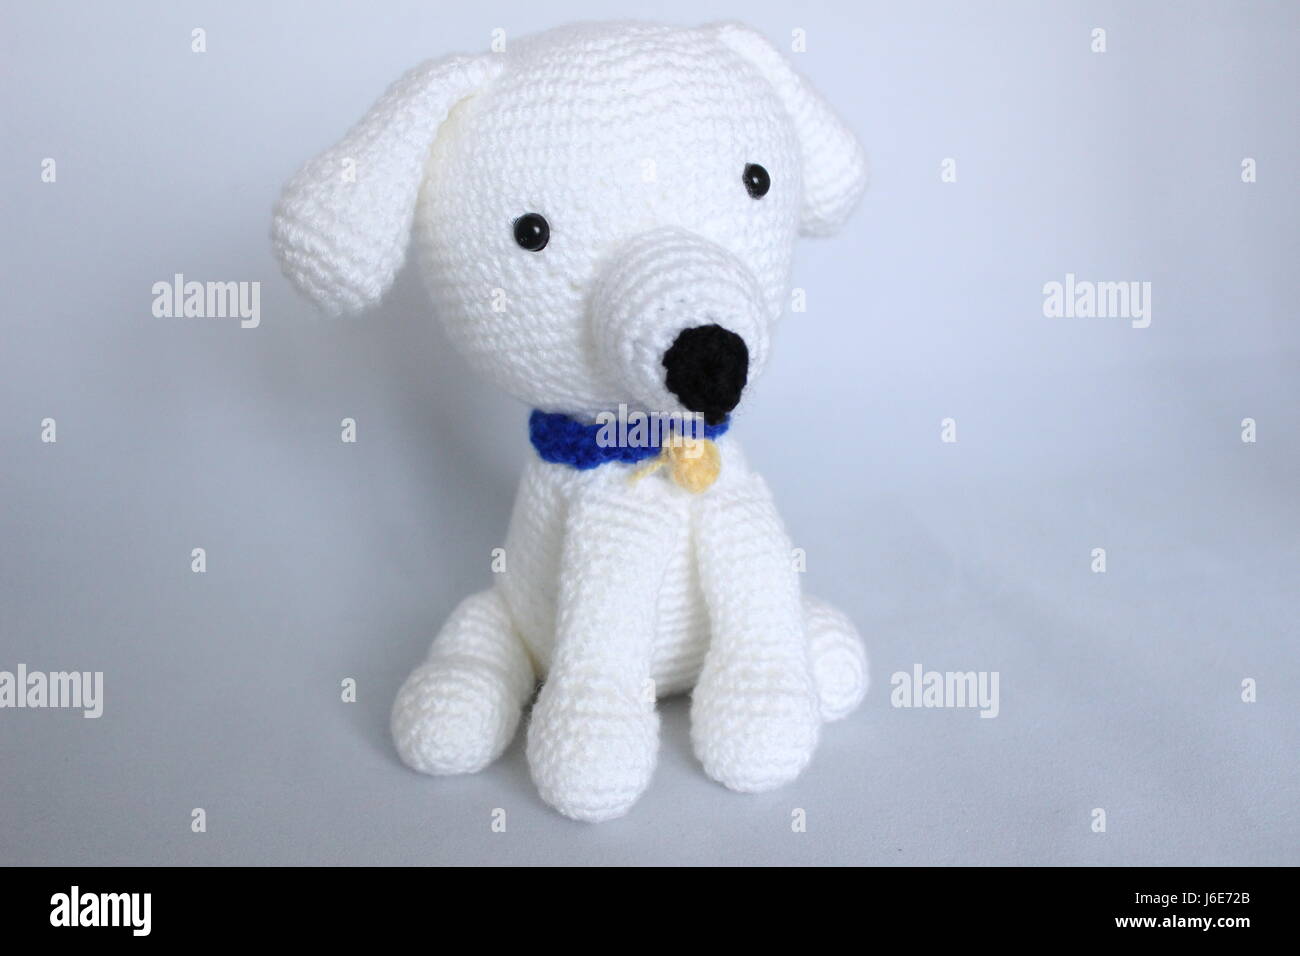 White dog toy hand-crocheted posed on white background Stock Photo